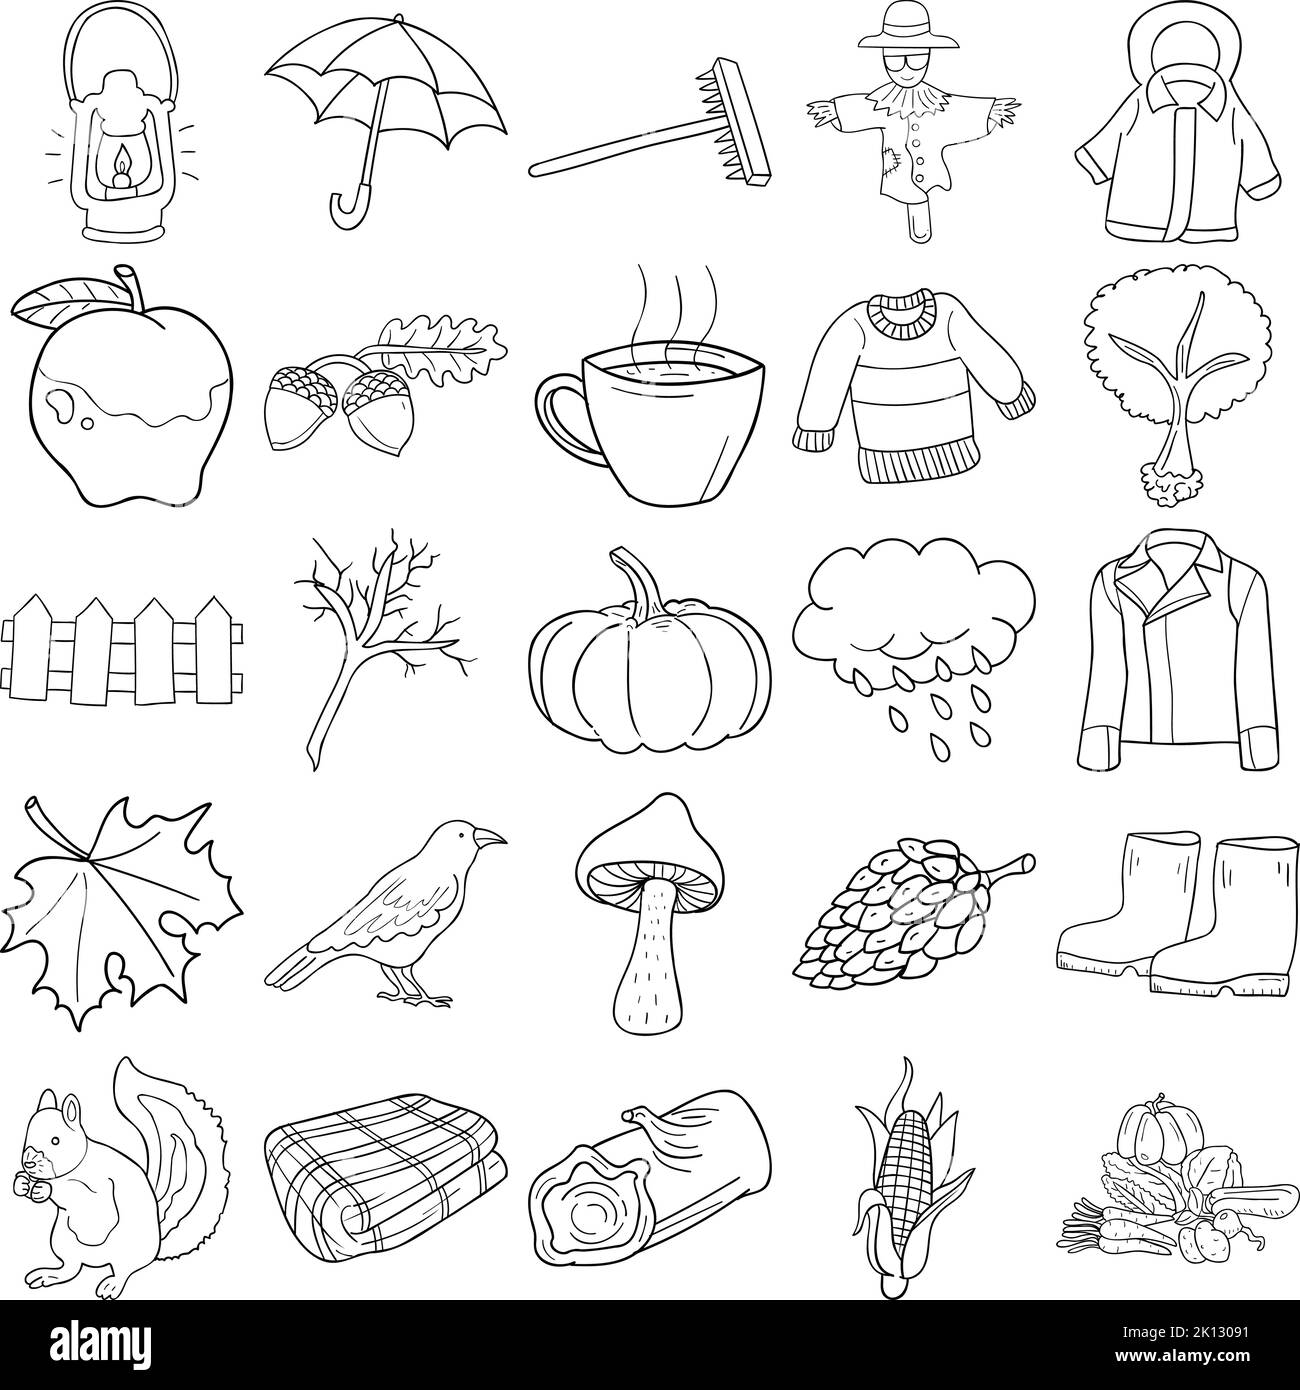 Autumn Hand Drawn Doodle Line Art Outline Set Containing Lantern, Umbrella, Rake, Harvest, Crow, Pumpkin, Branch, Log, Corn, Squirrel, Jacket, Apple Stock Vector